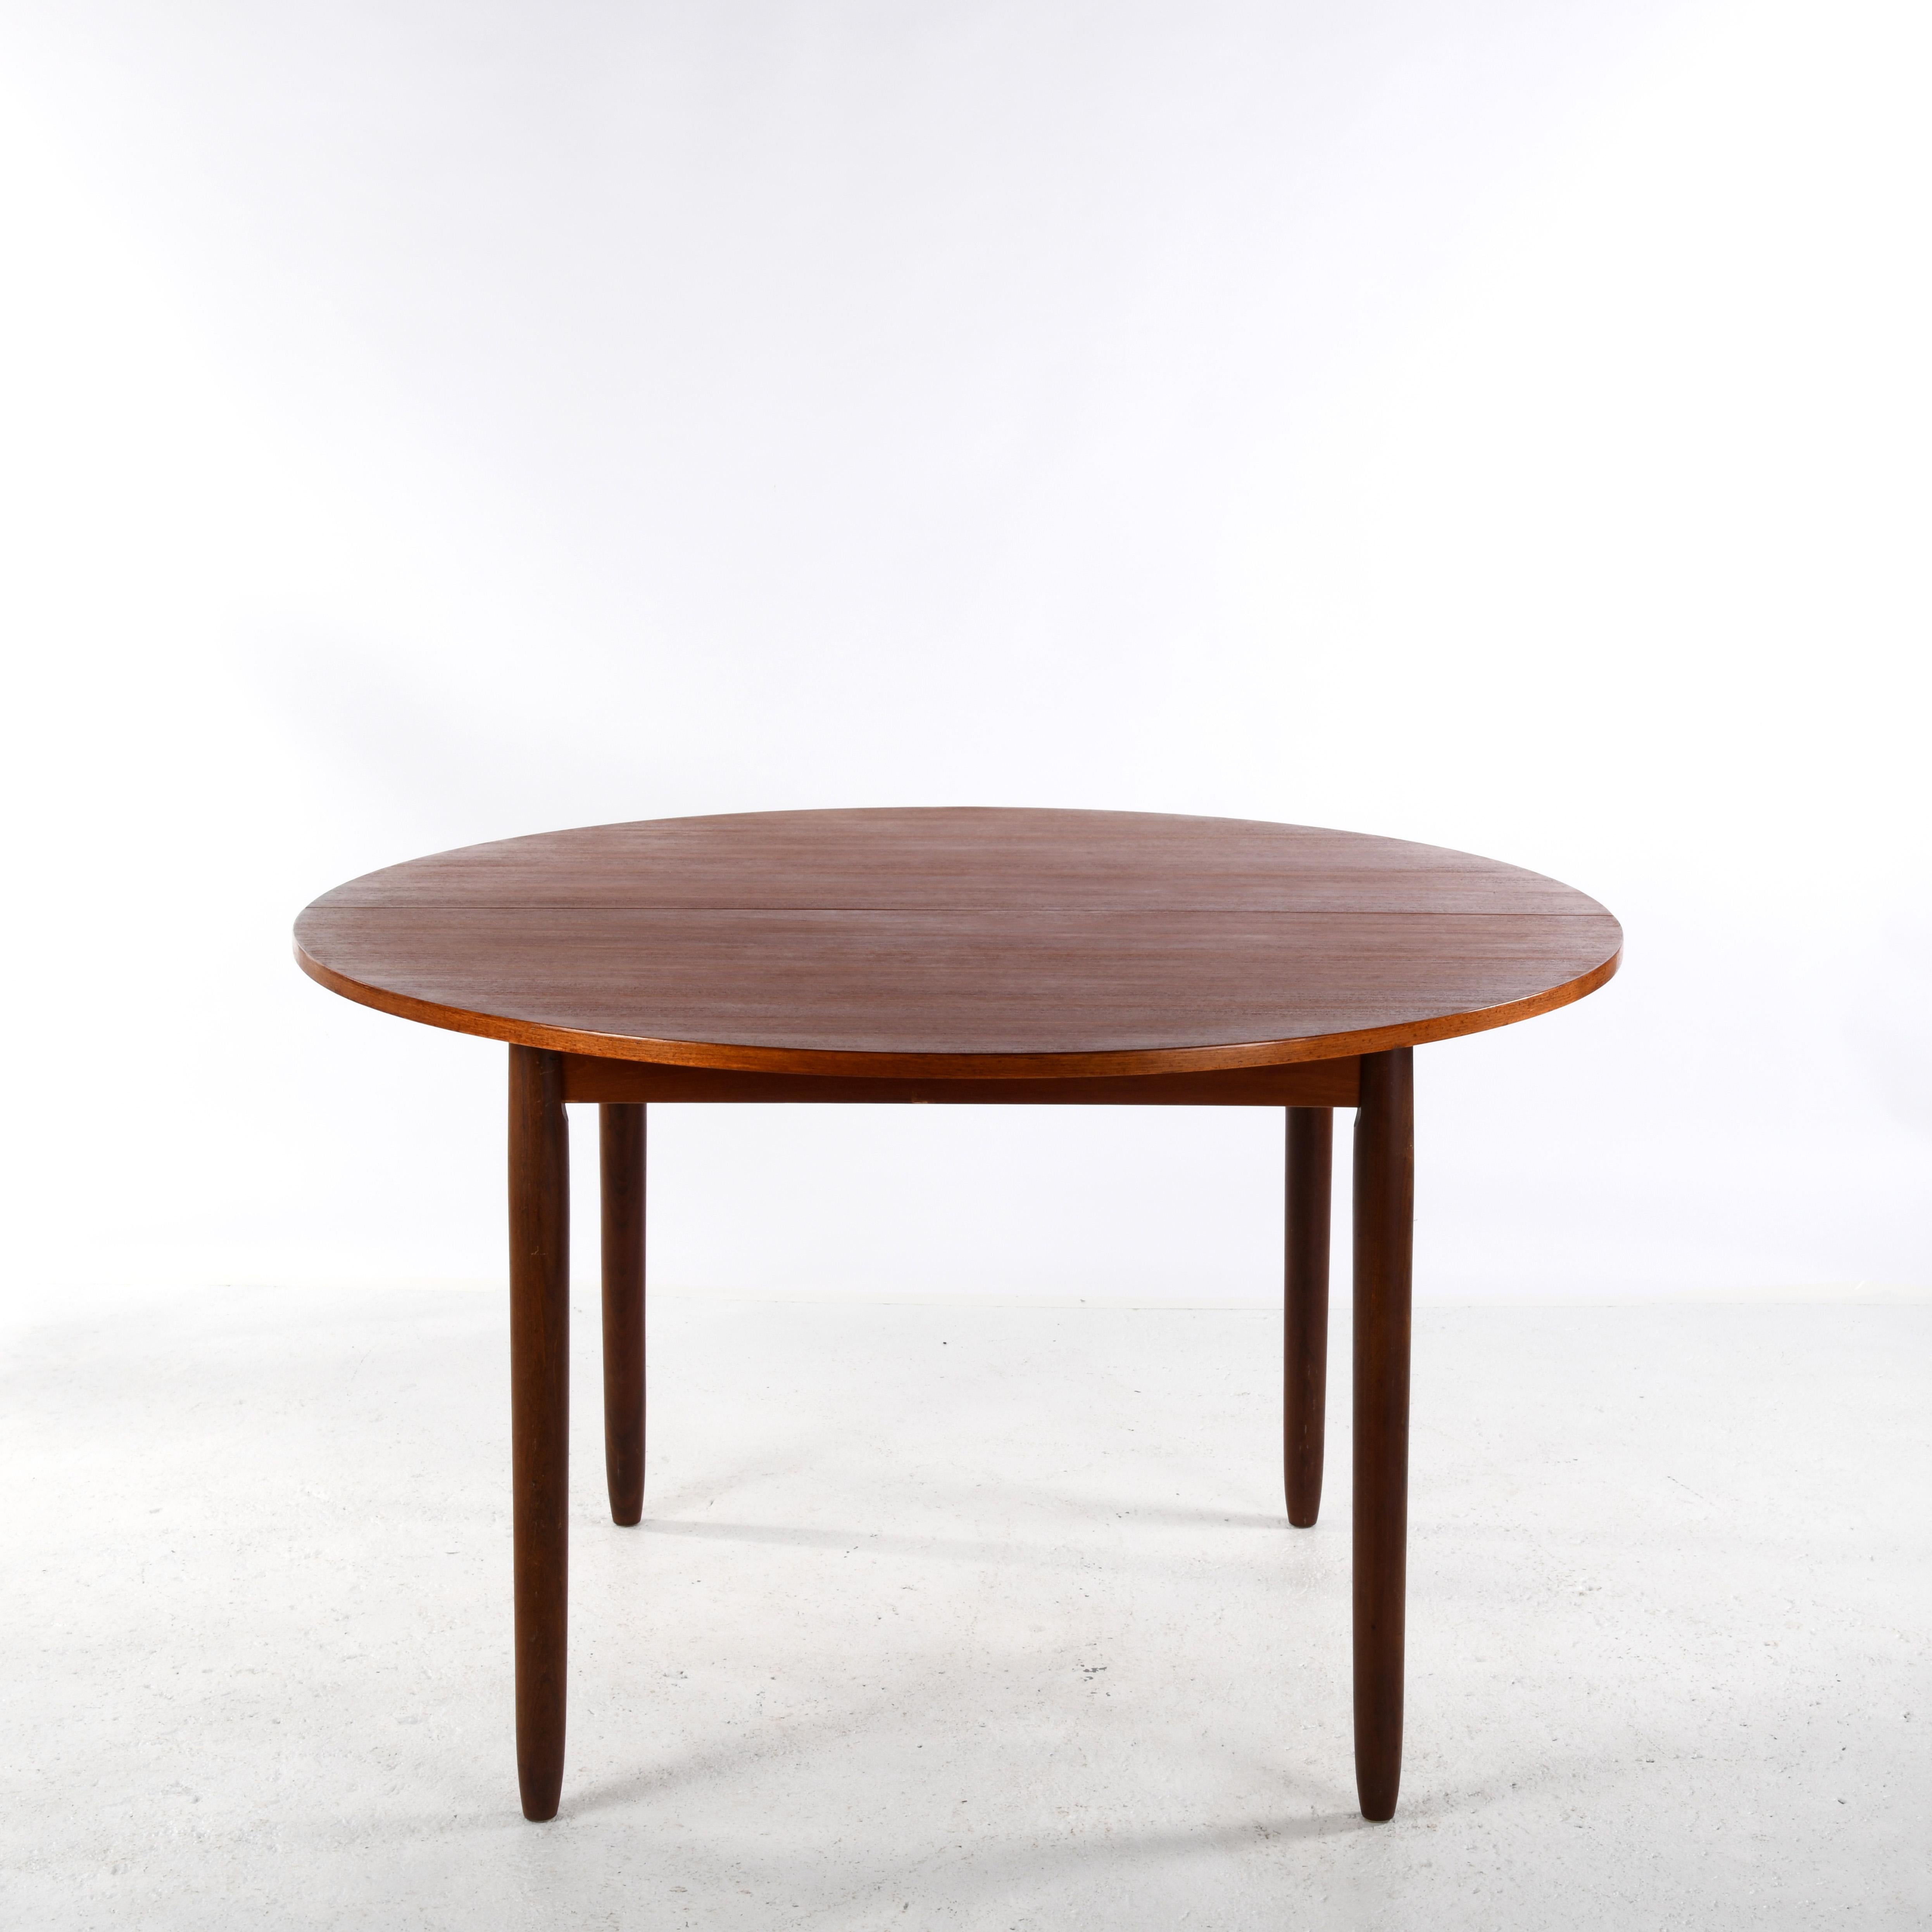 Danish Scandinavian vintage teak extensible table, round and oval